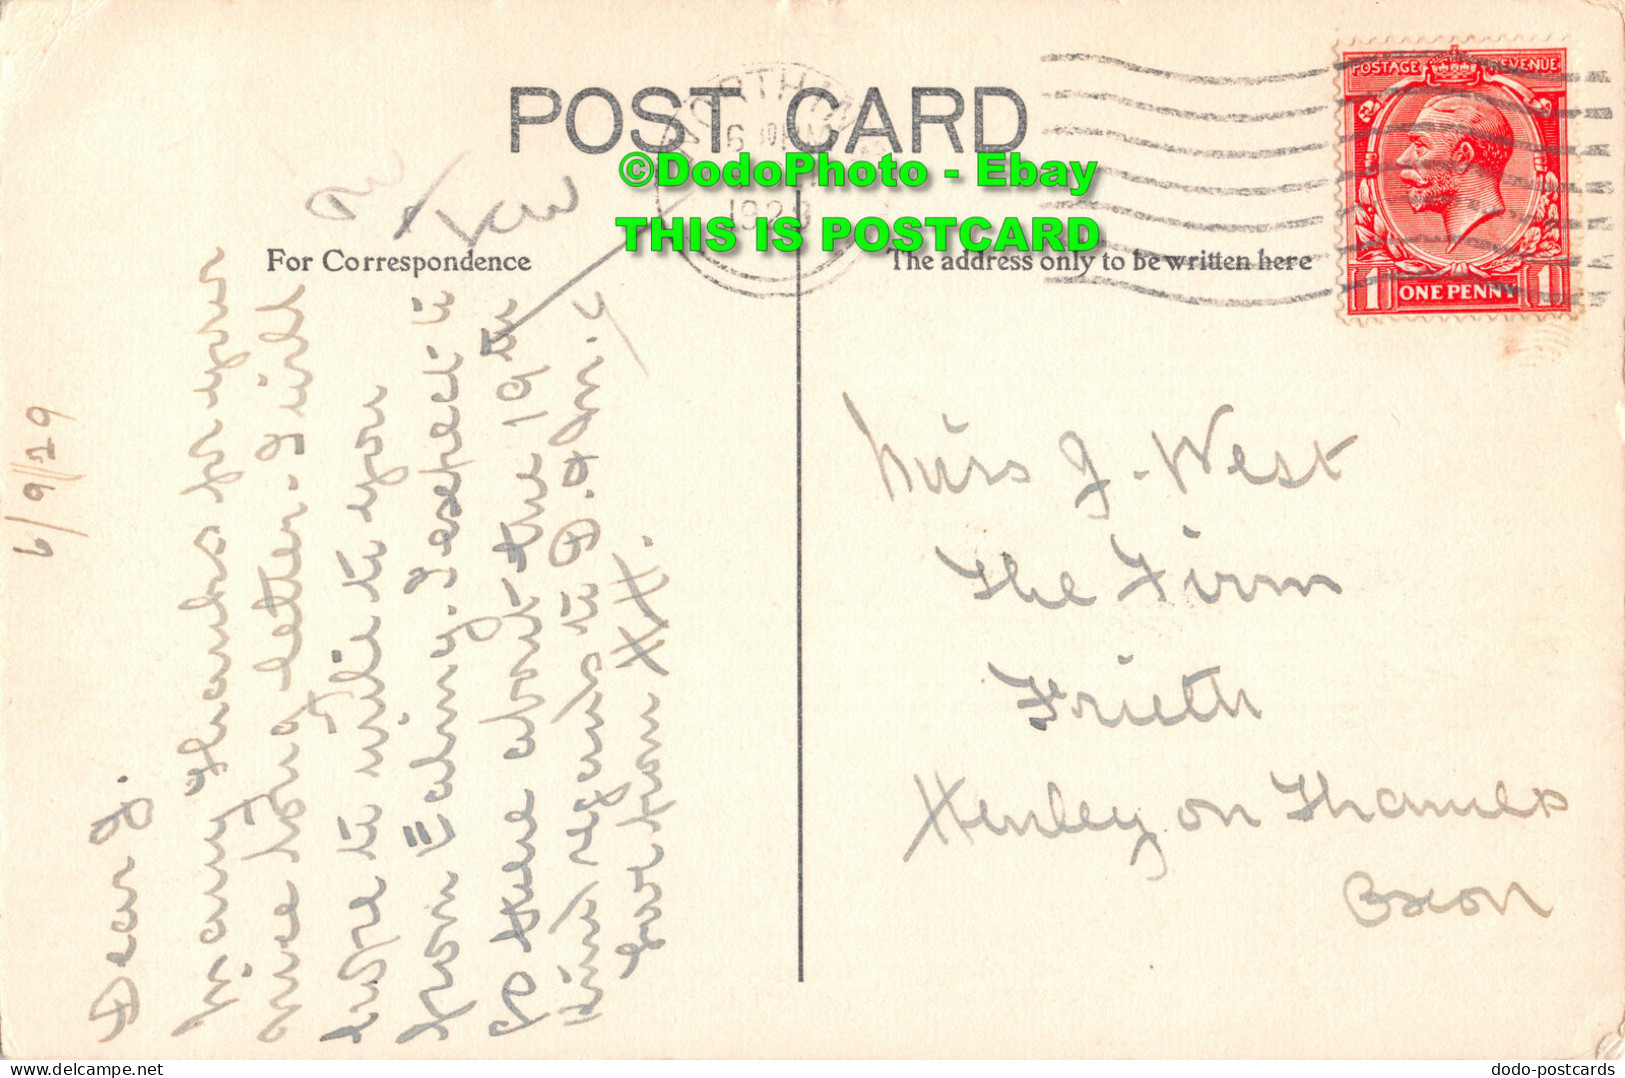 R347140 Worthing. Denton Gardens. Postcard. 1929 - Monde